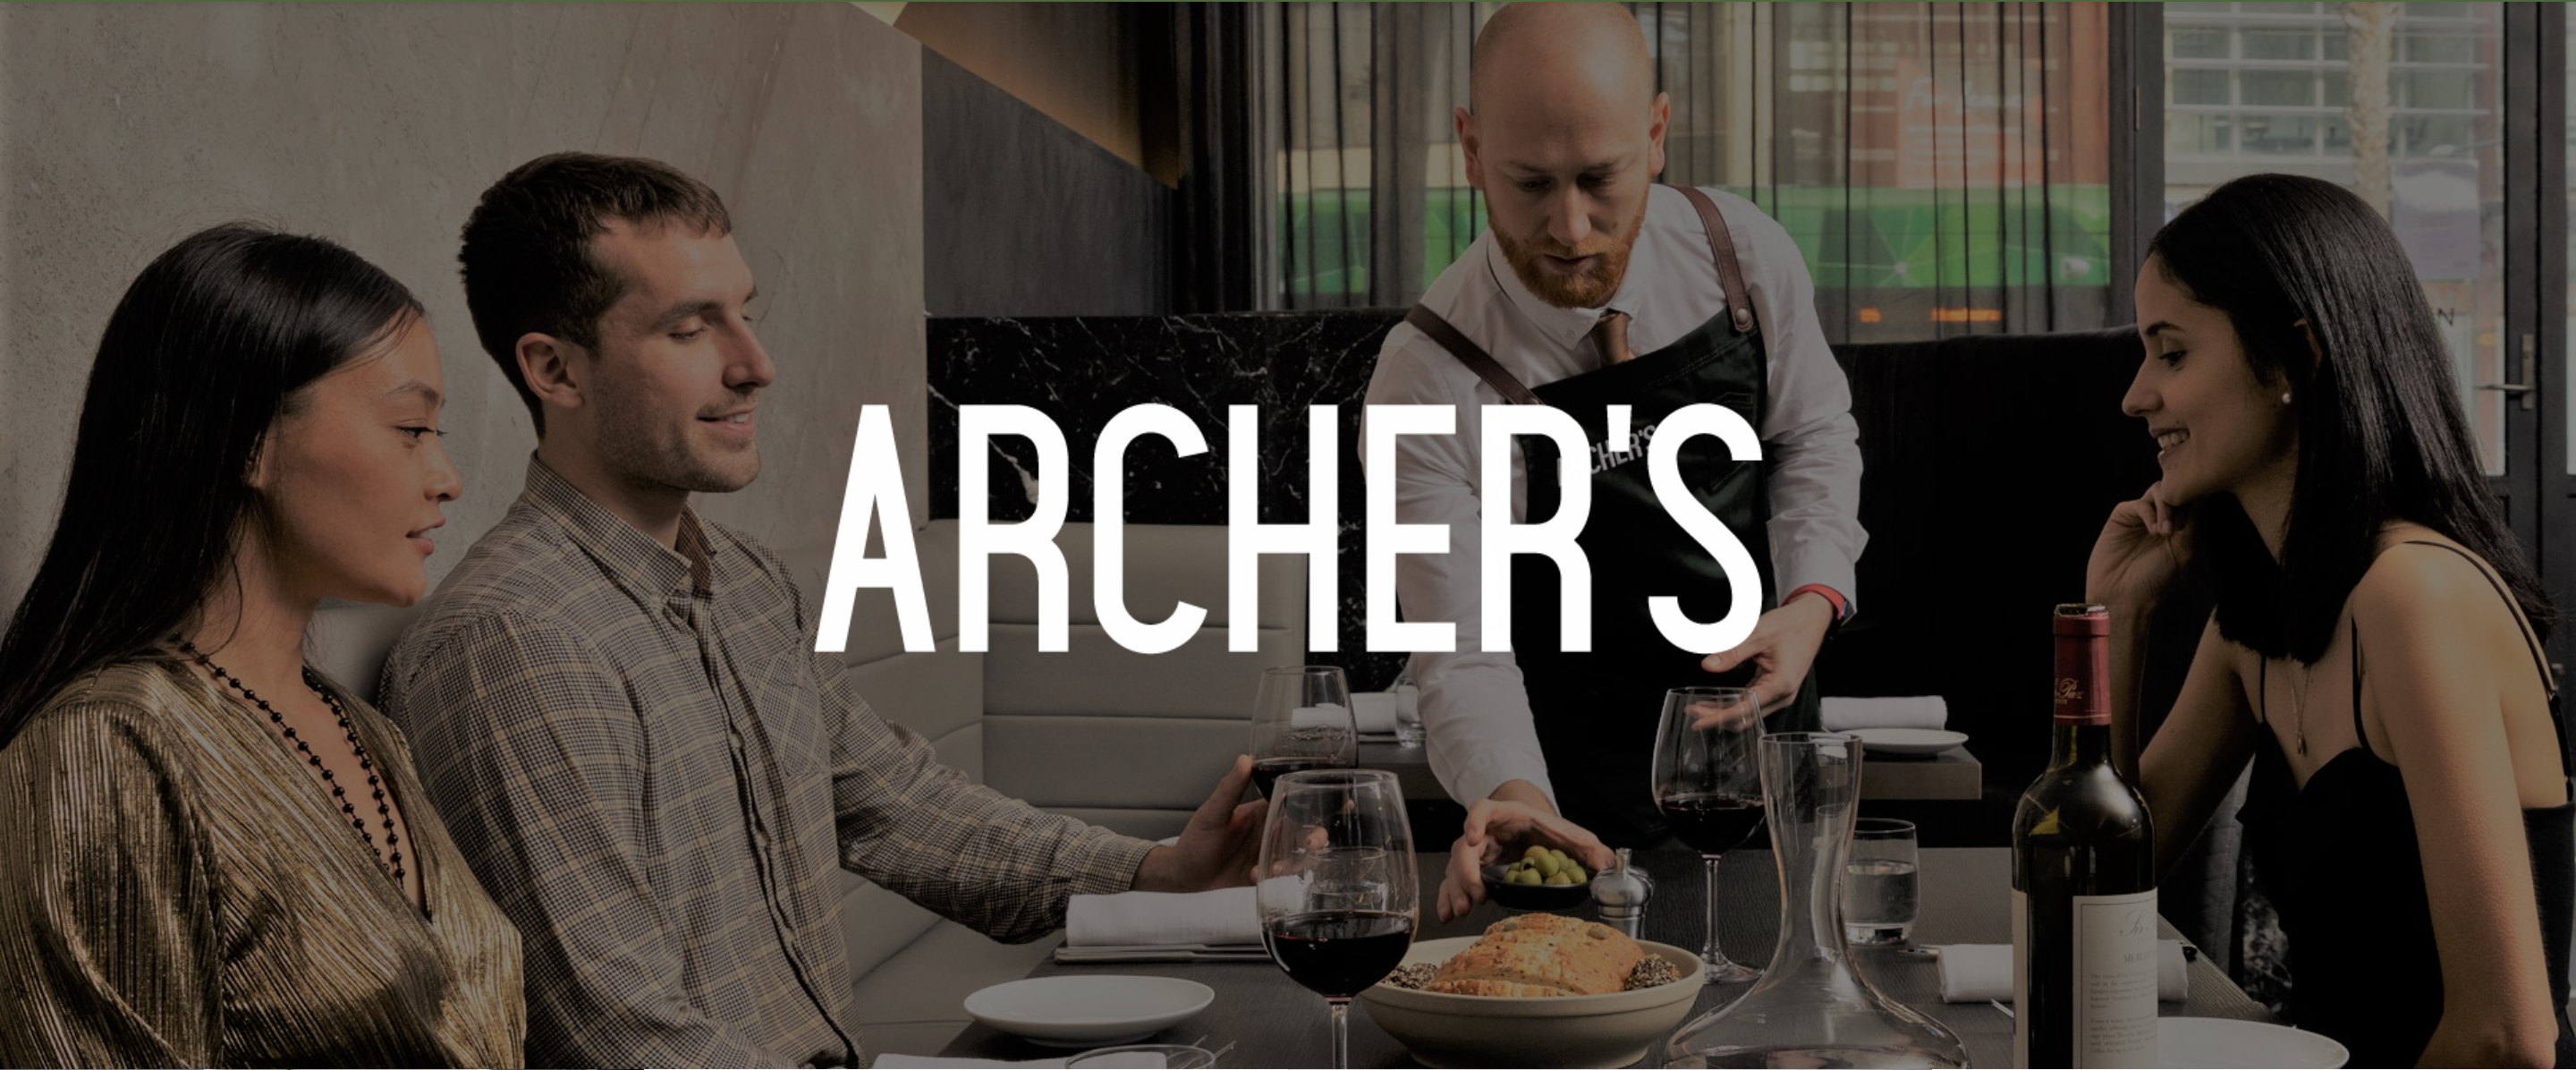 Archer's (Marriott)